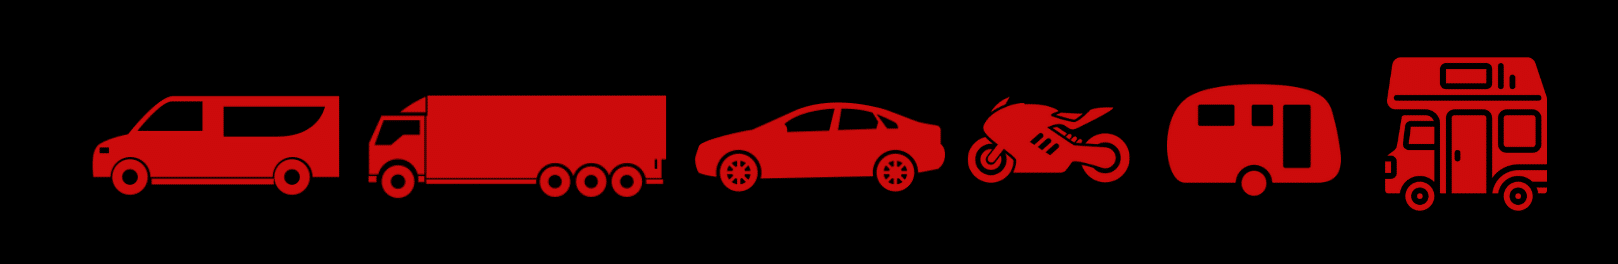 Vehicle Tracking FAQs